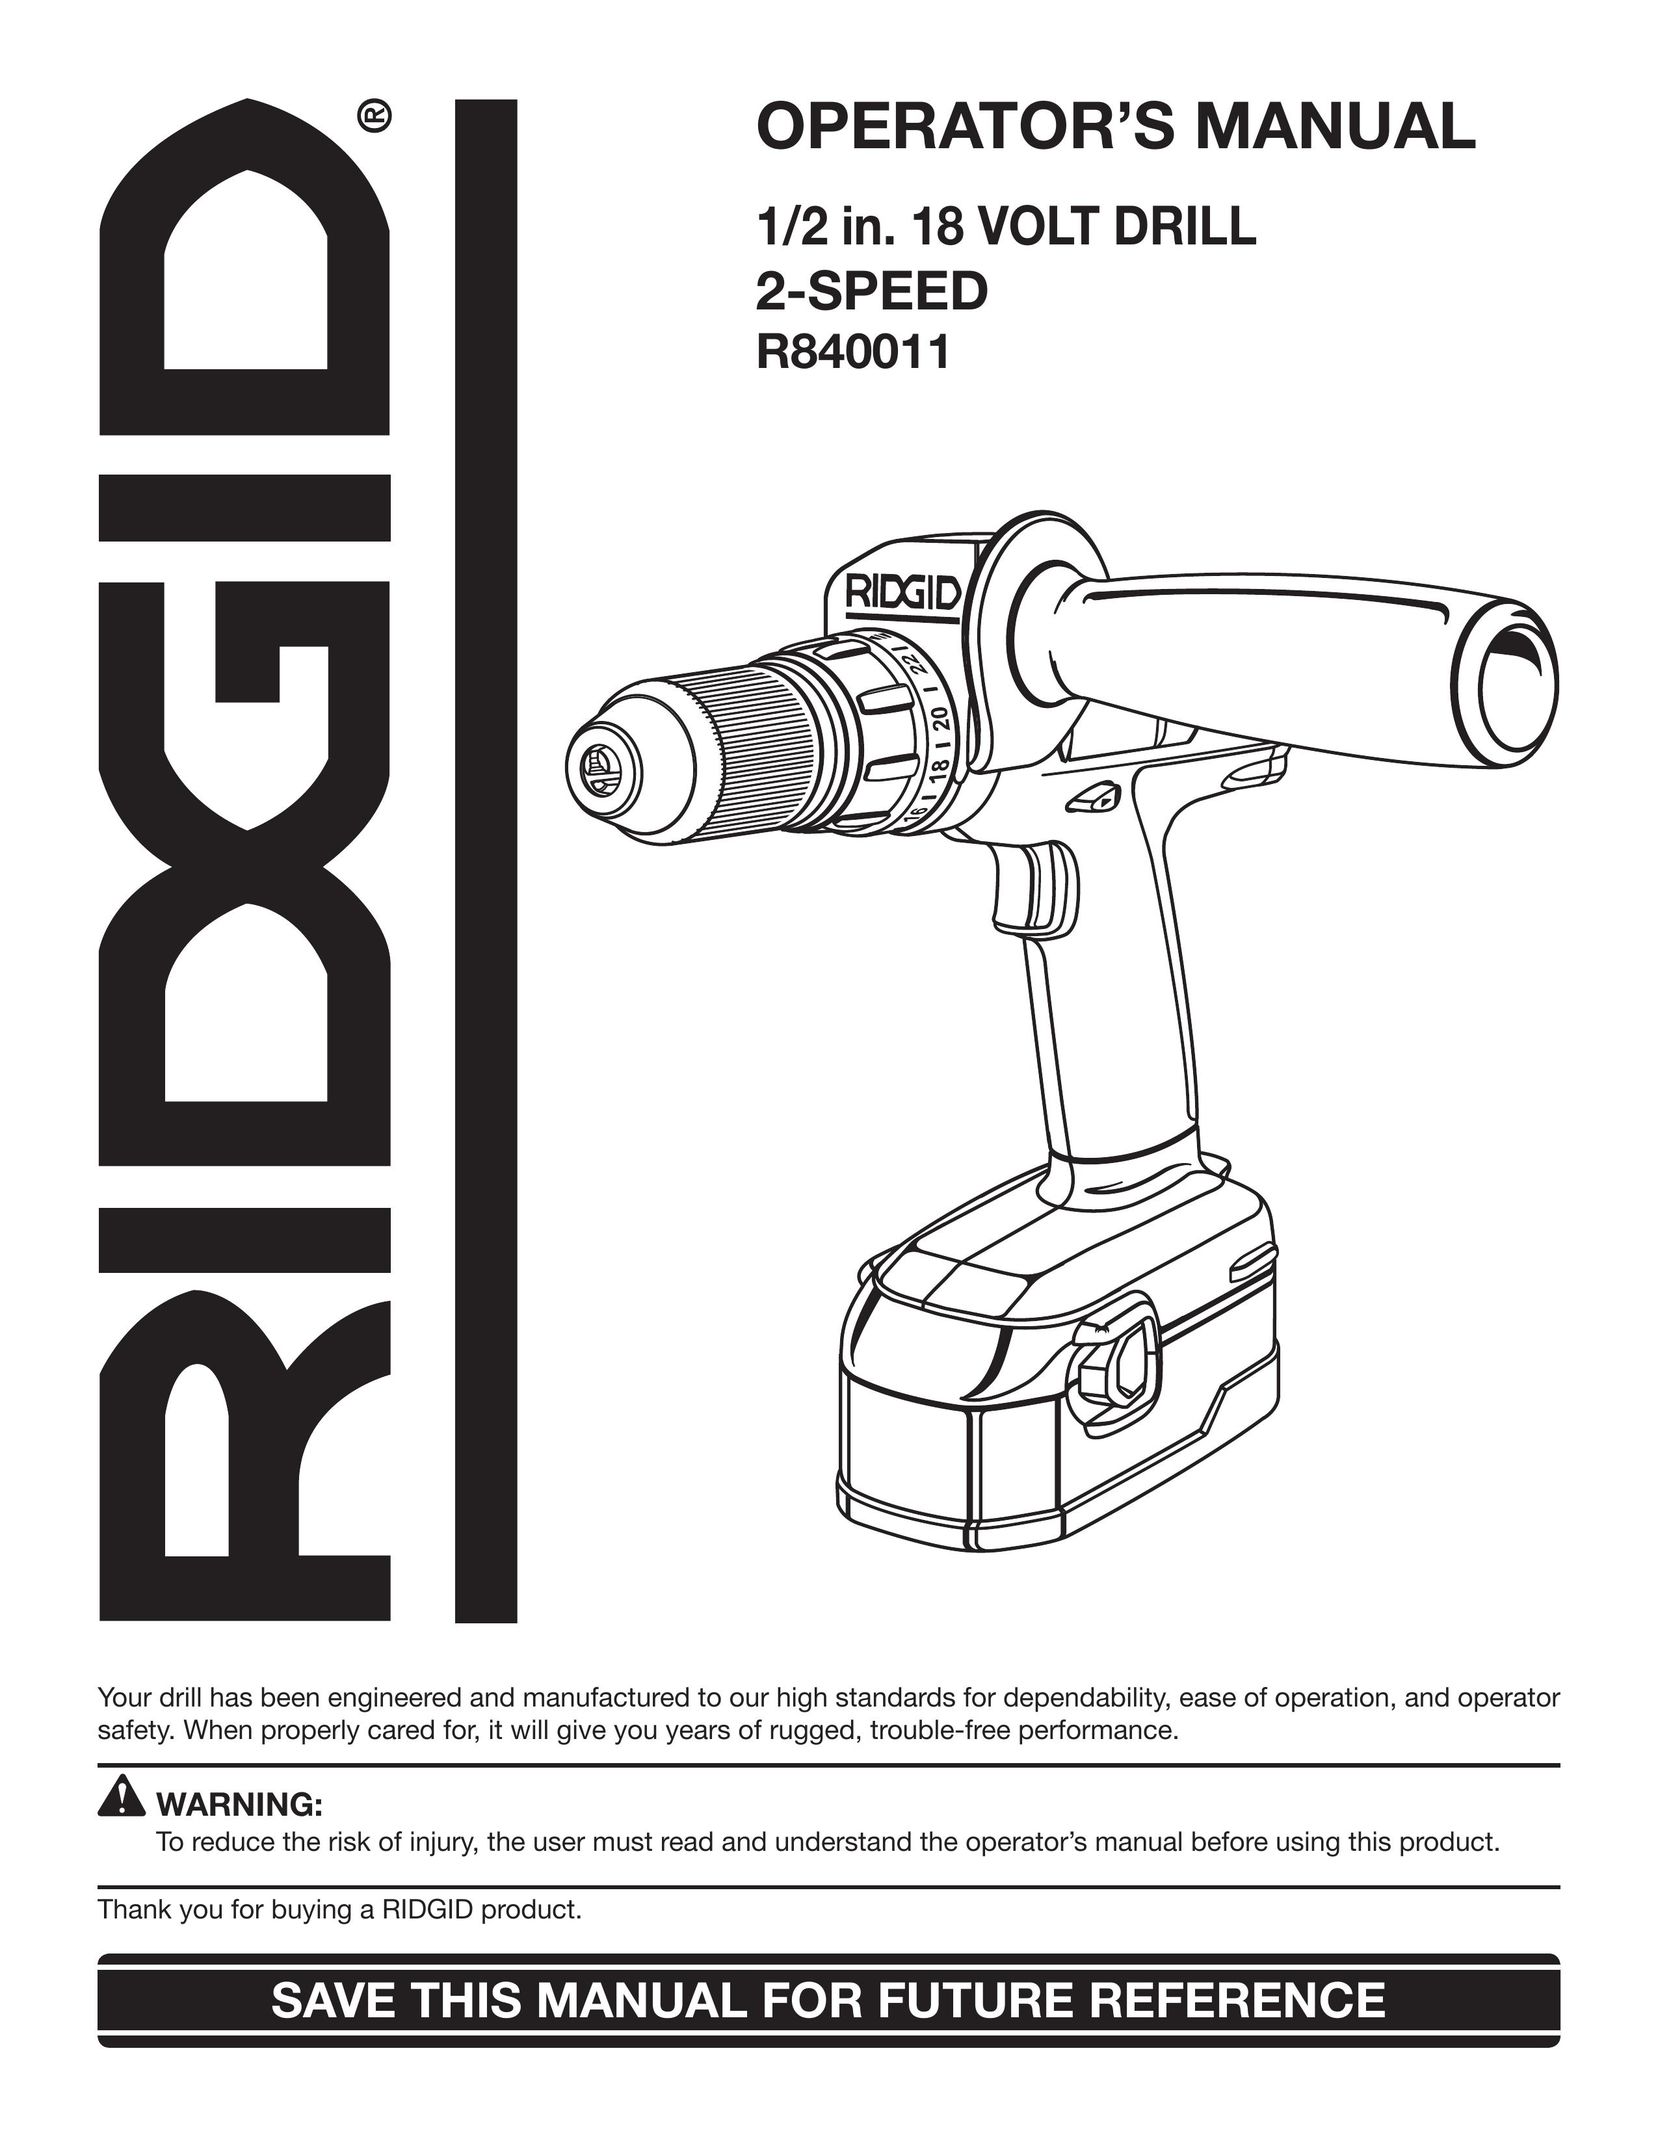 RIDGID R840011 Drill User Manual